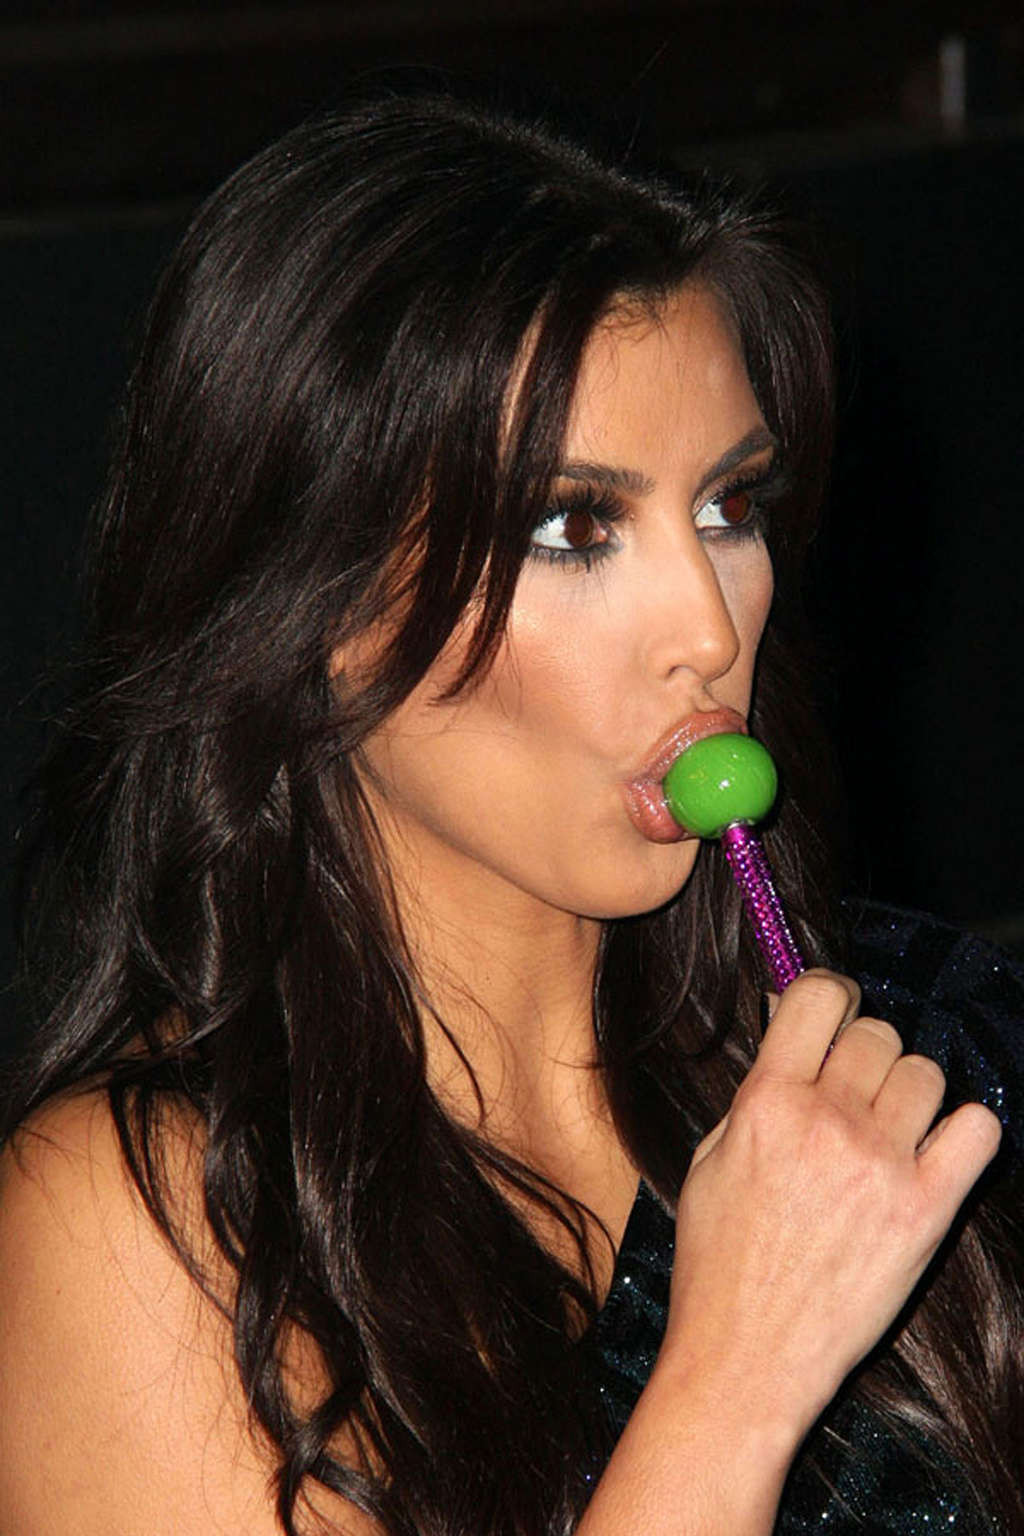 Kim Kardashian licking lollipop on a extremely sexy way hot photos #75362977